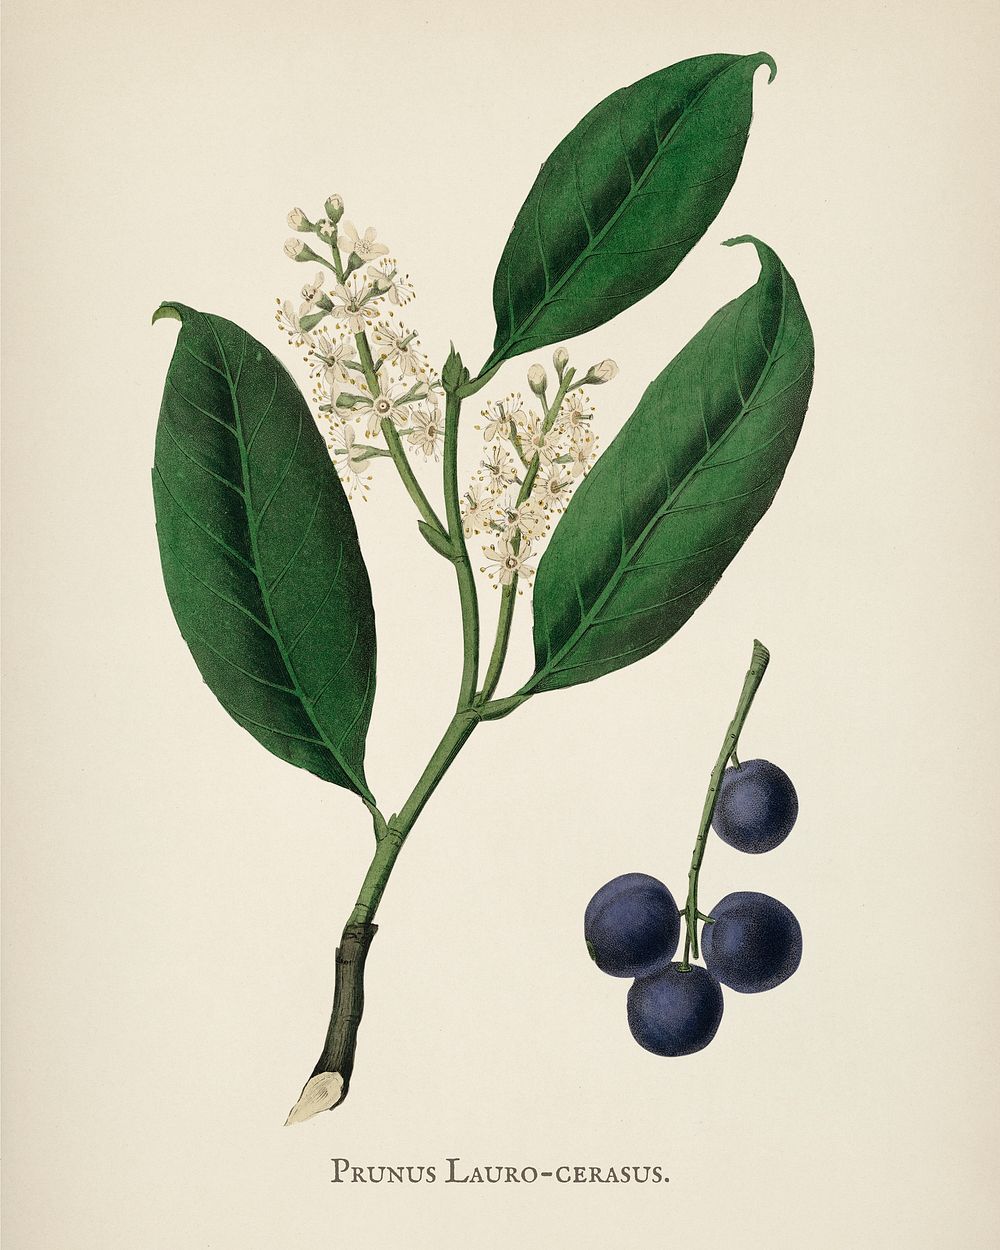 Cherry laurel (Prunus laurocerasus) illustration from Medical Botany (1836) by John Stephenson and James Morss Churchill.